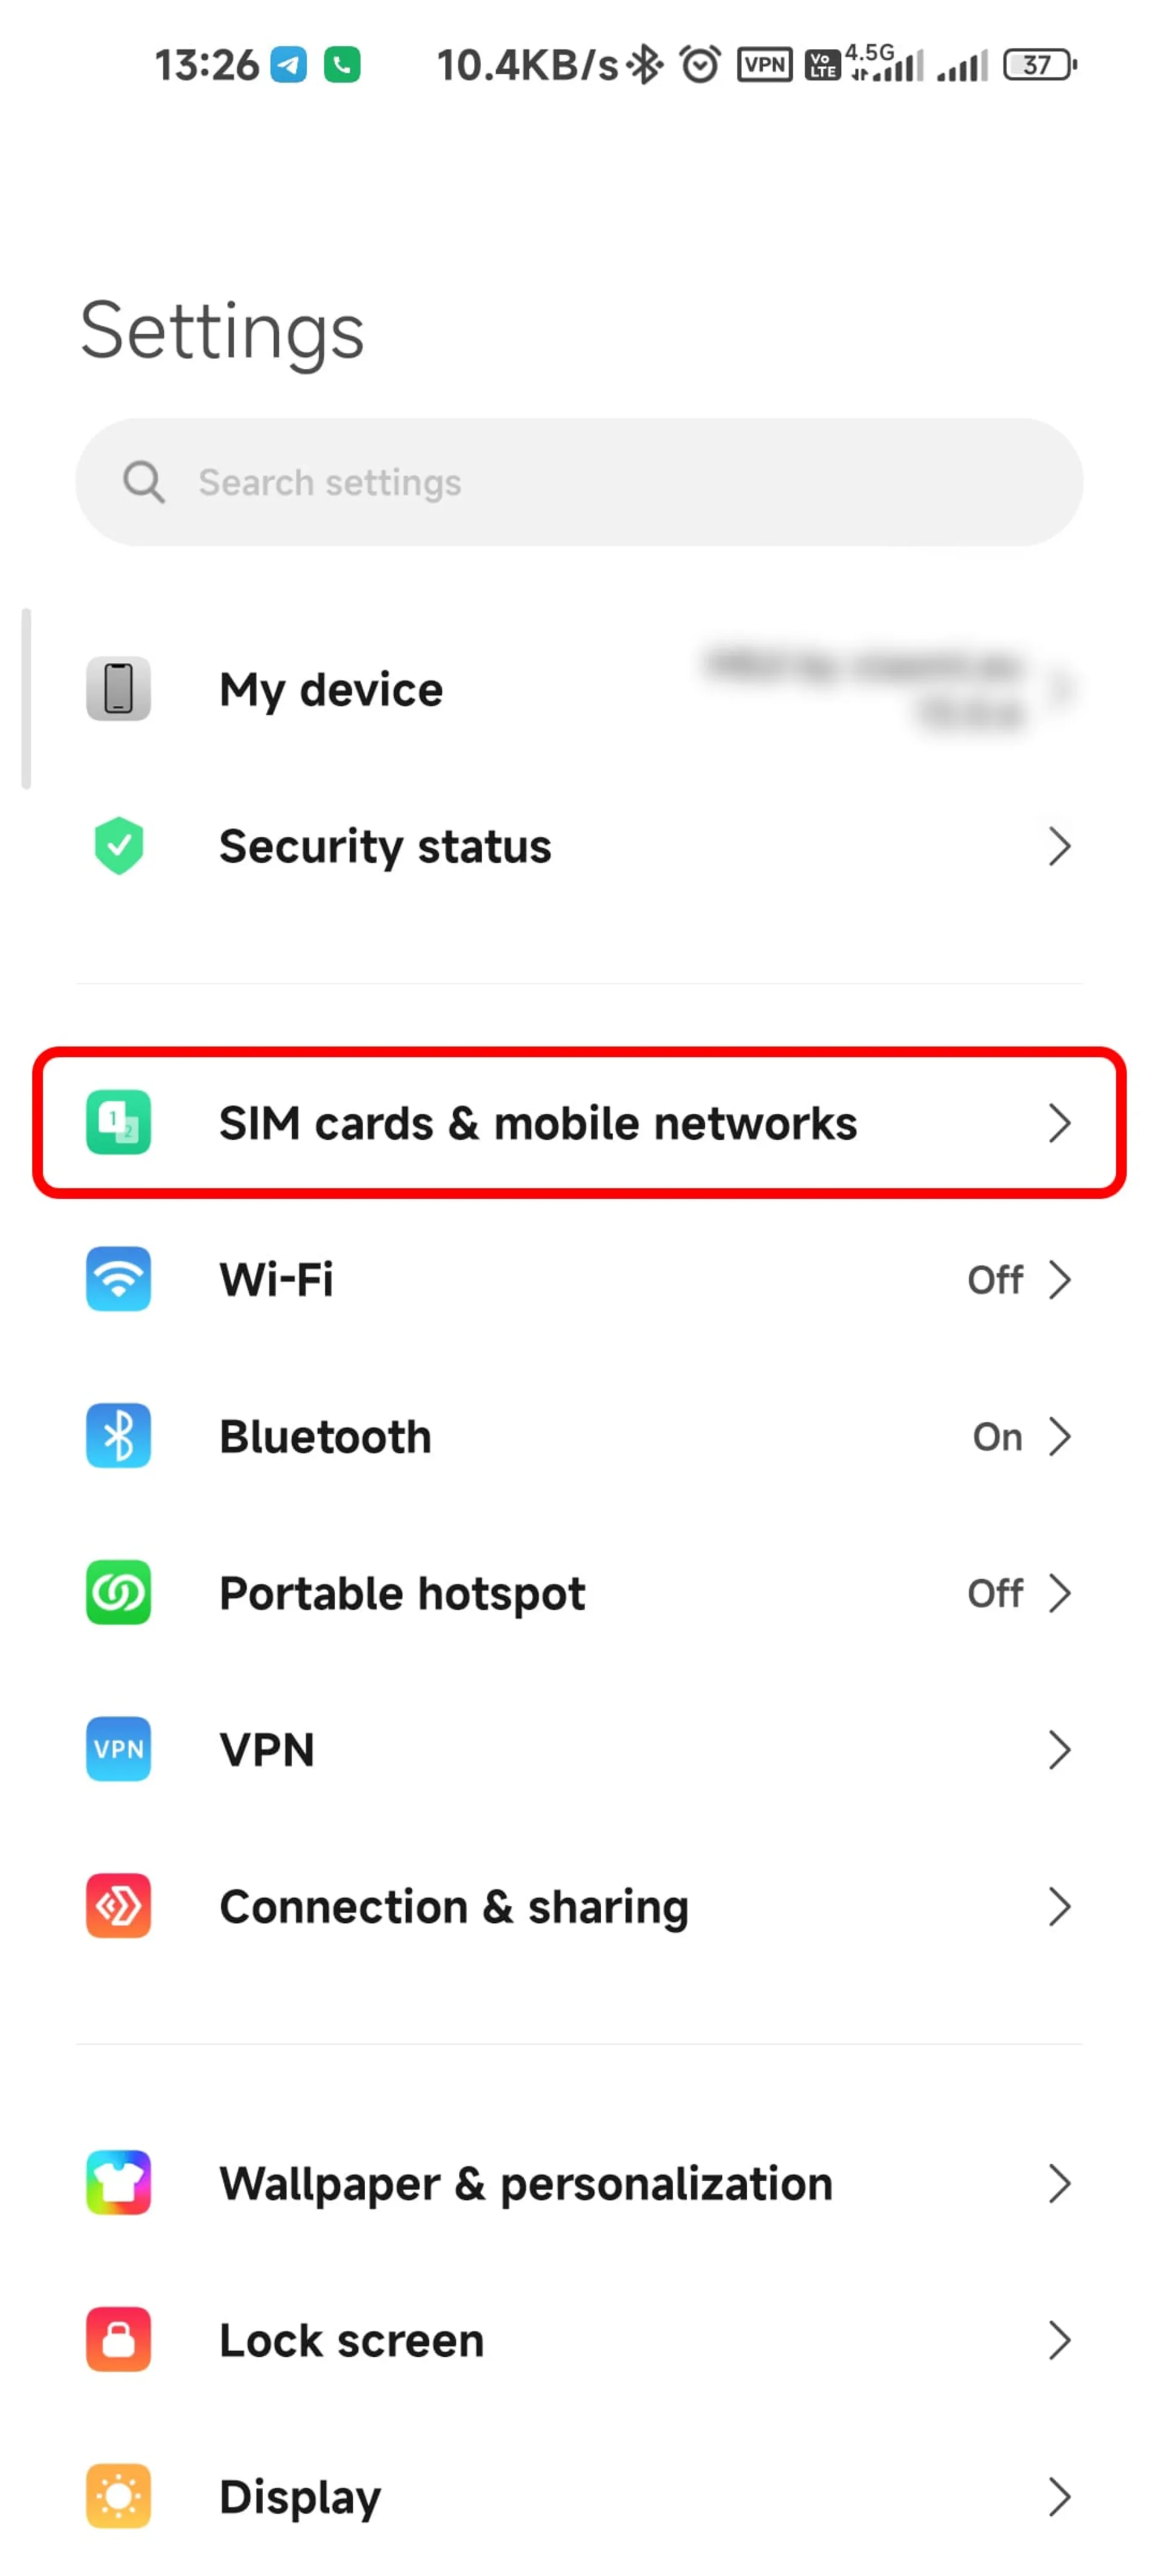 انتخاب گزینه SIM cards & mobile networks